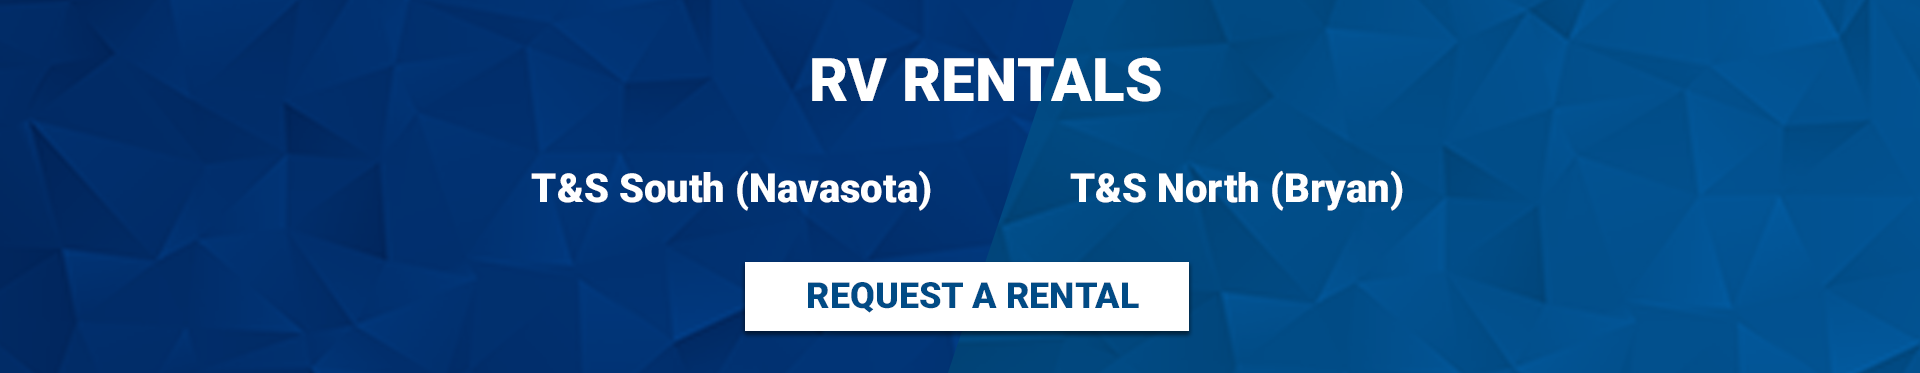 RV rentals